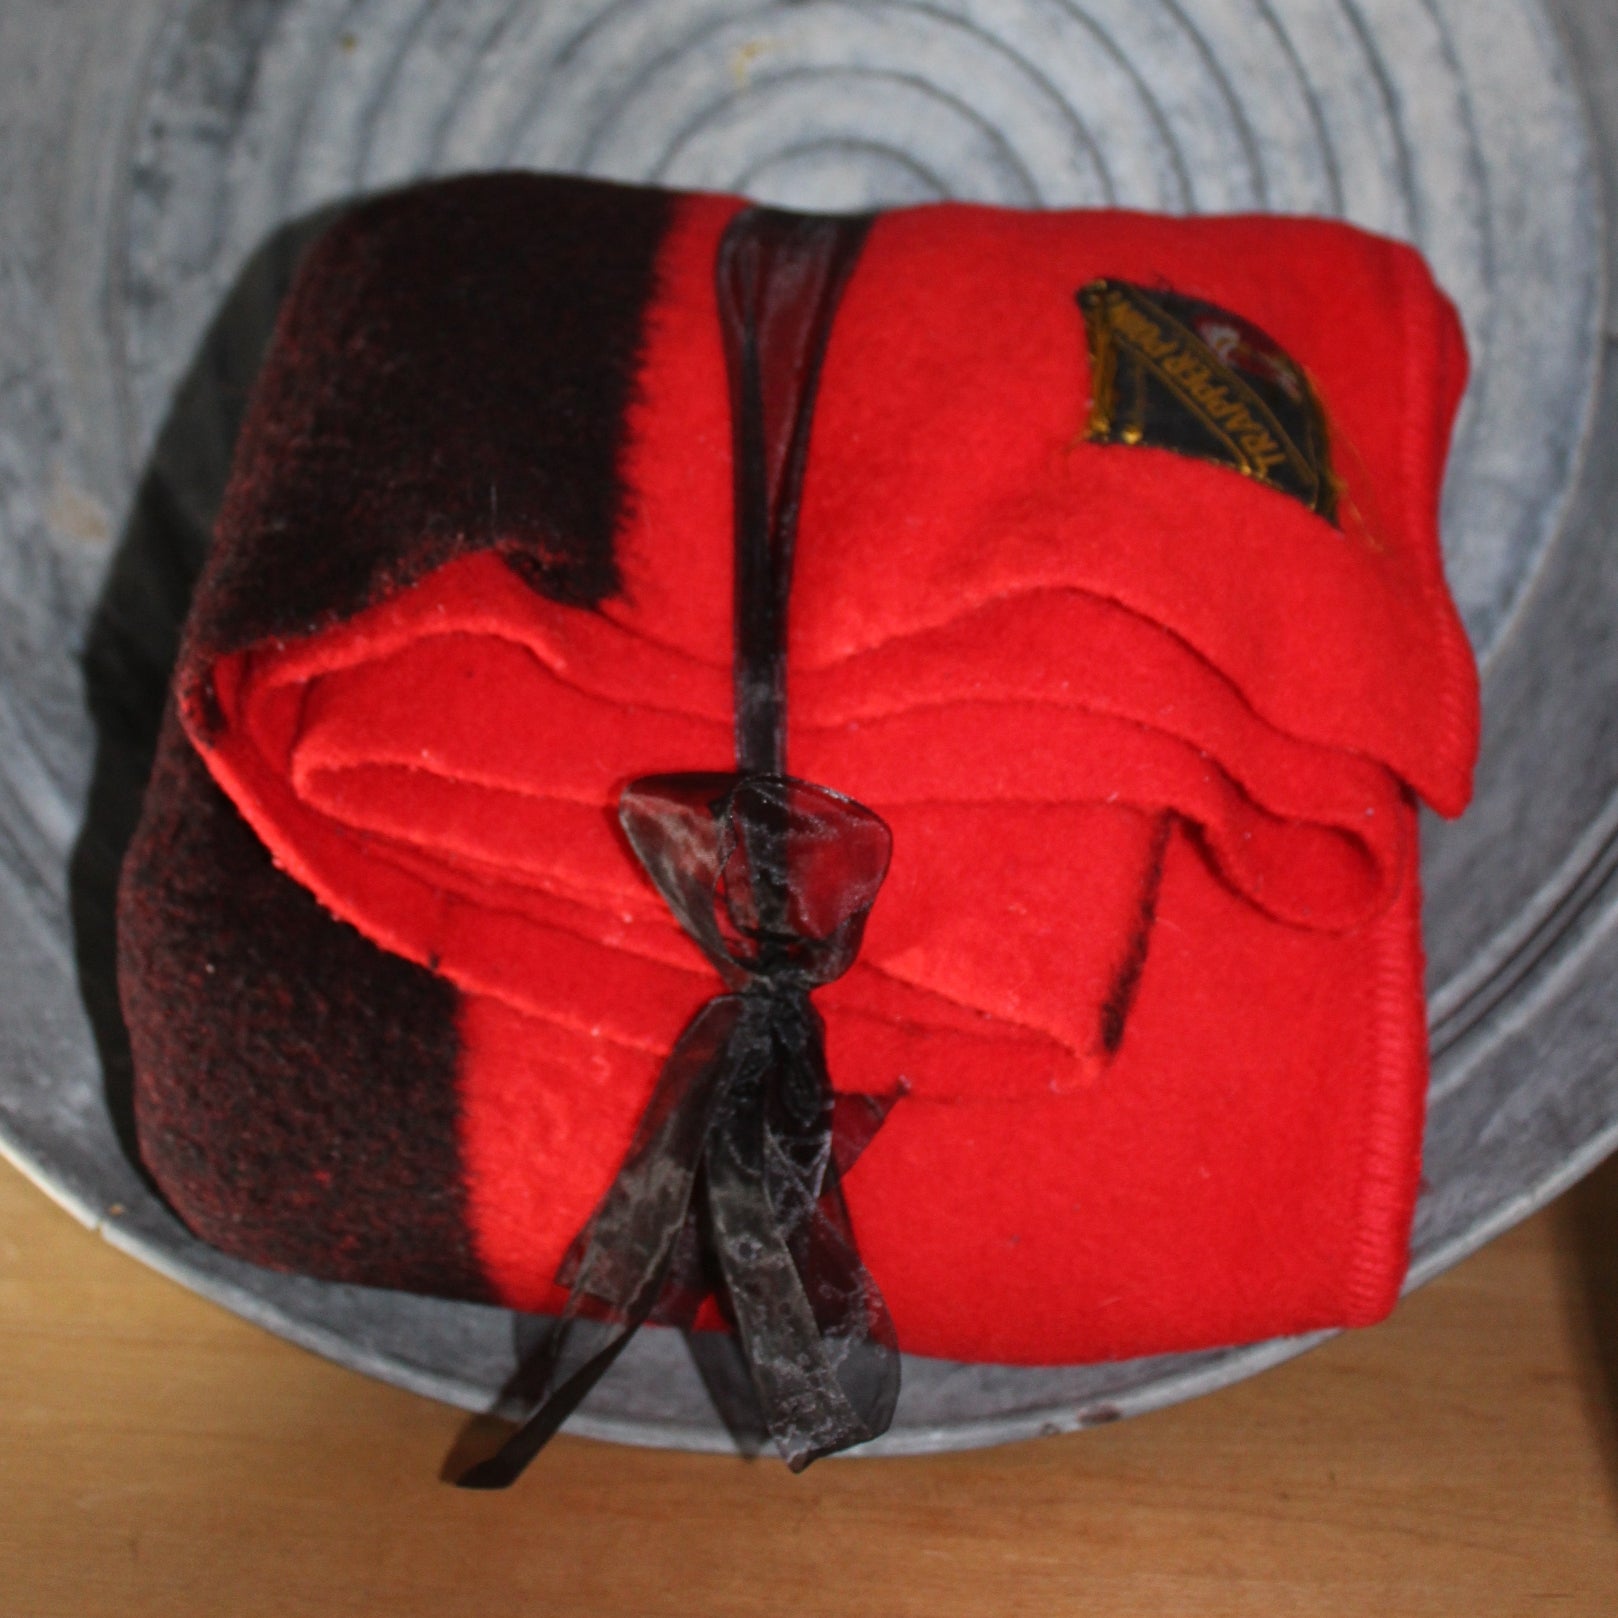 fantastic Eaton Trapper vintage blanket heavy red wool with black wide stripe has original tag